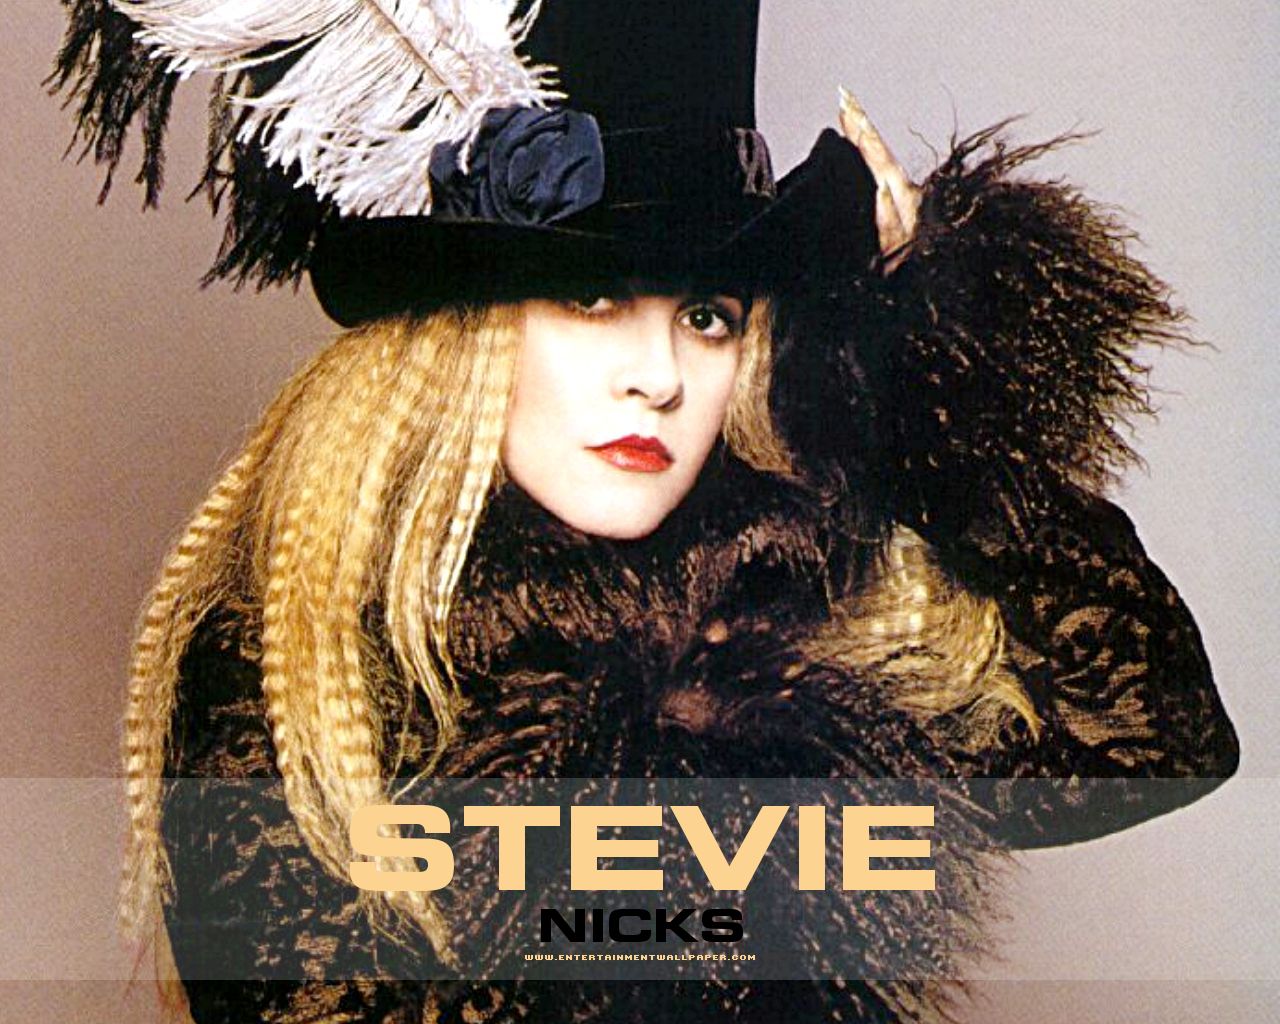 Stevie Nicks Wallpaper 3 The Queen of Scream